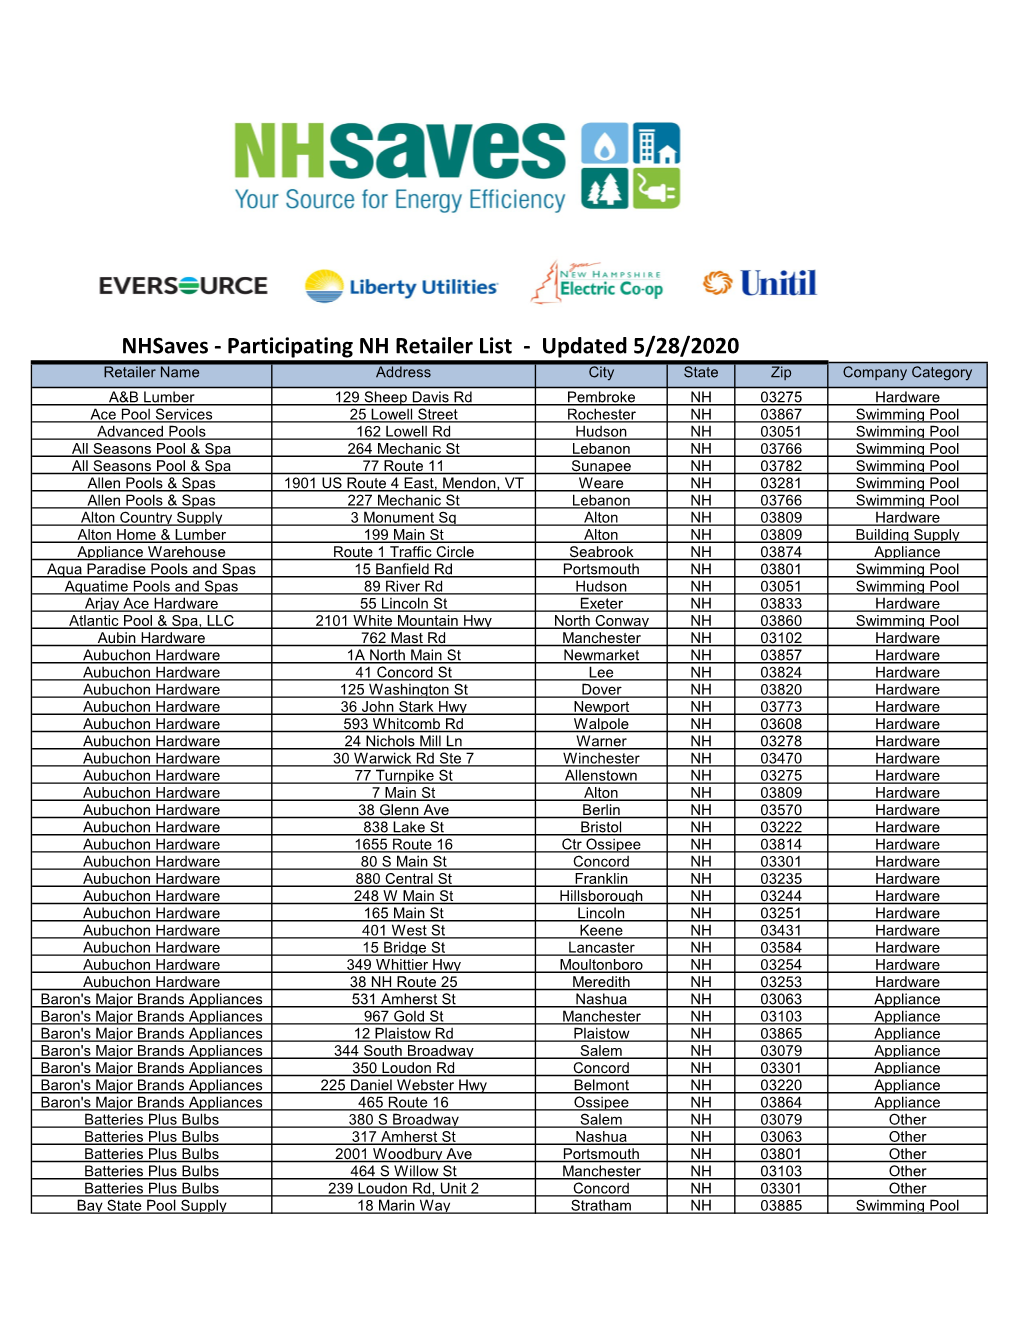 Participating NH Retailer List